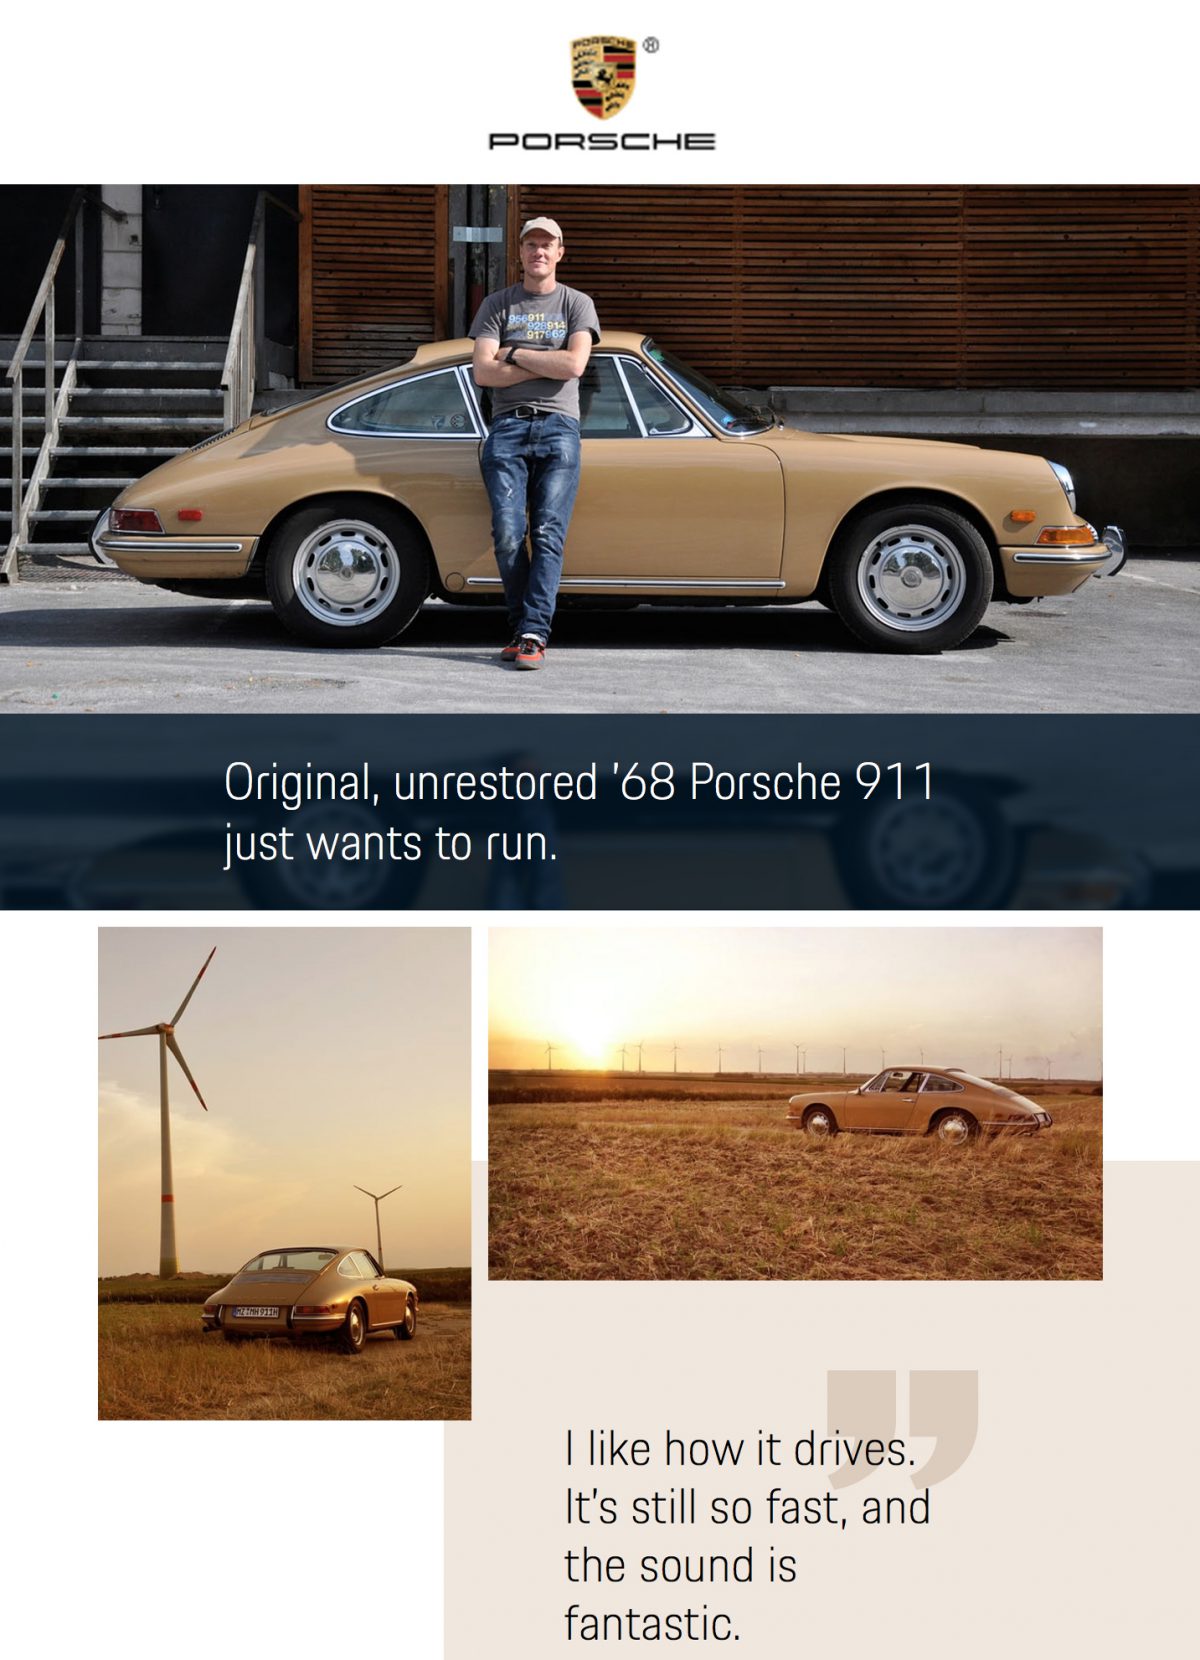 Porsche Stories: Original, unrestored ’68 Porsche 911 just wants to run.